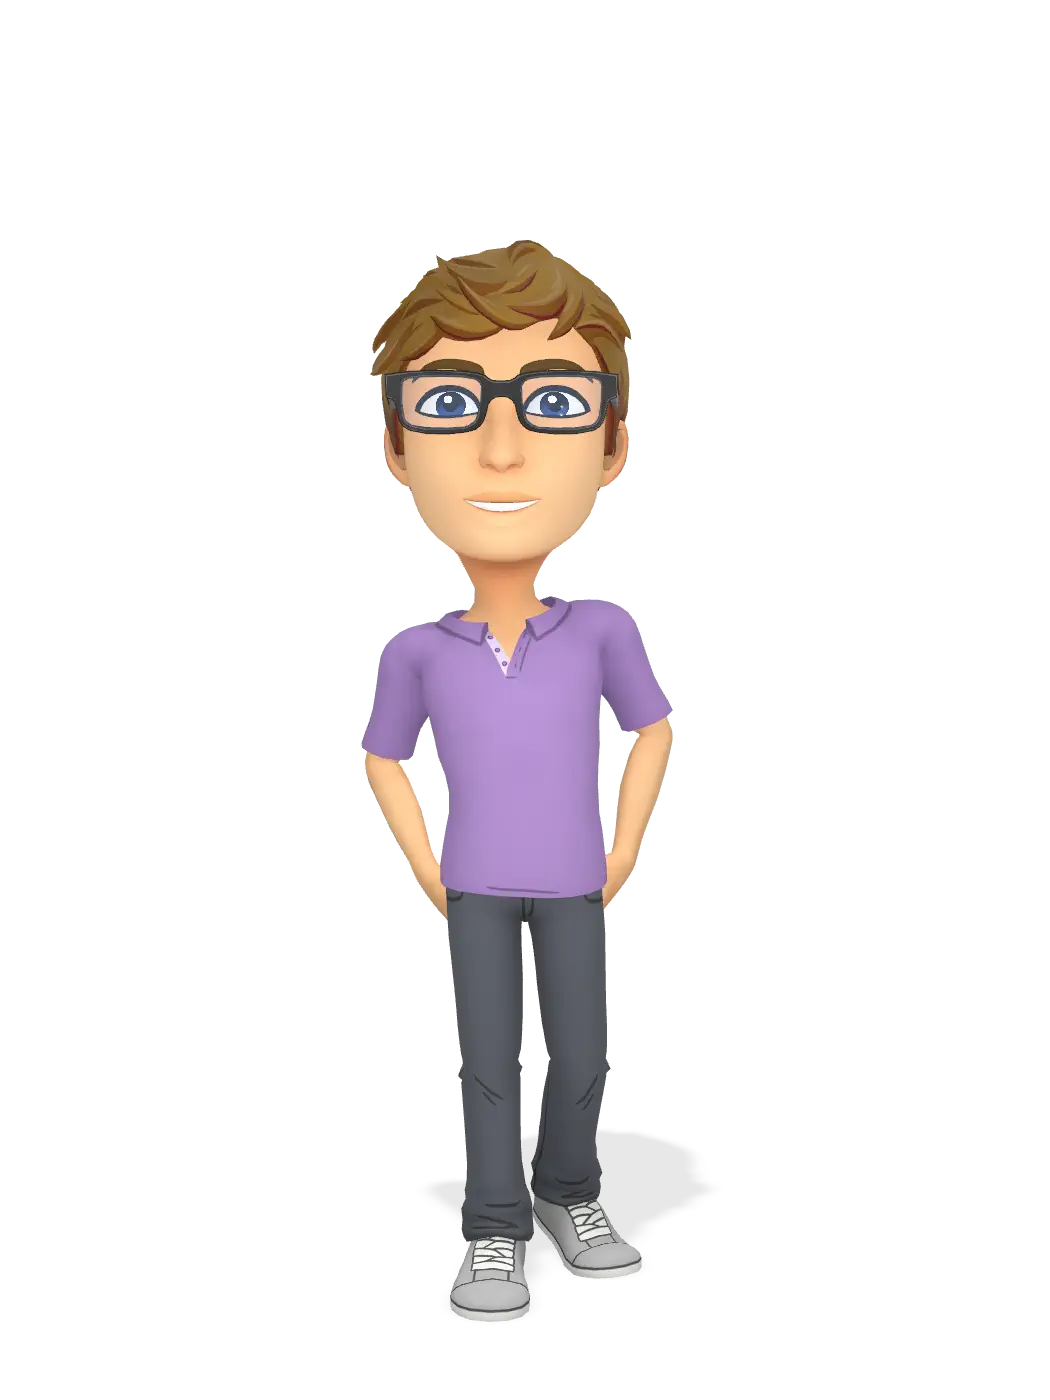 3D Bitmoji for osxdude avatar